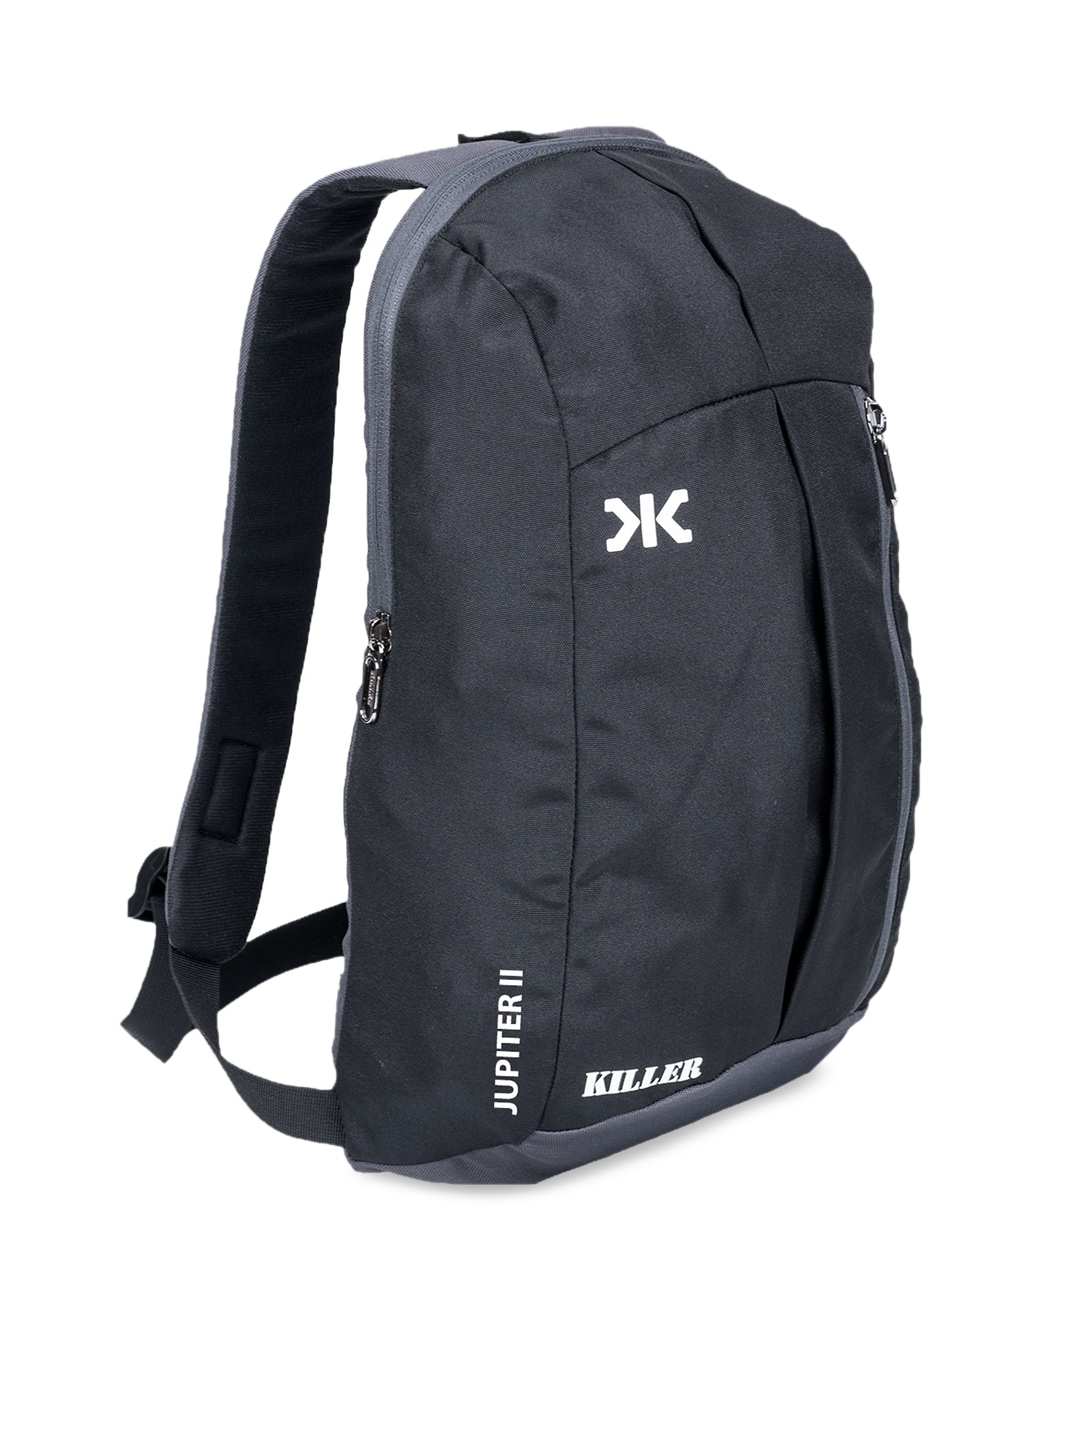 Killer Unisex Black & Grey Colourblocked Backpacks Price in India